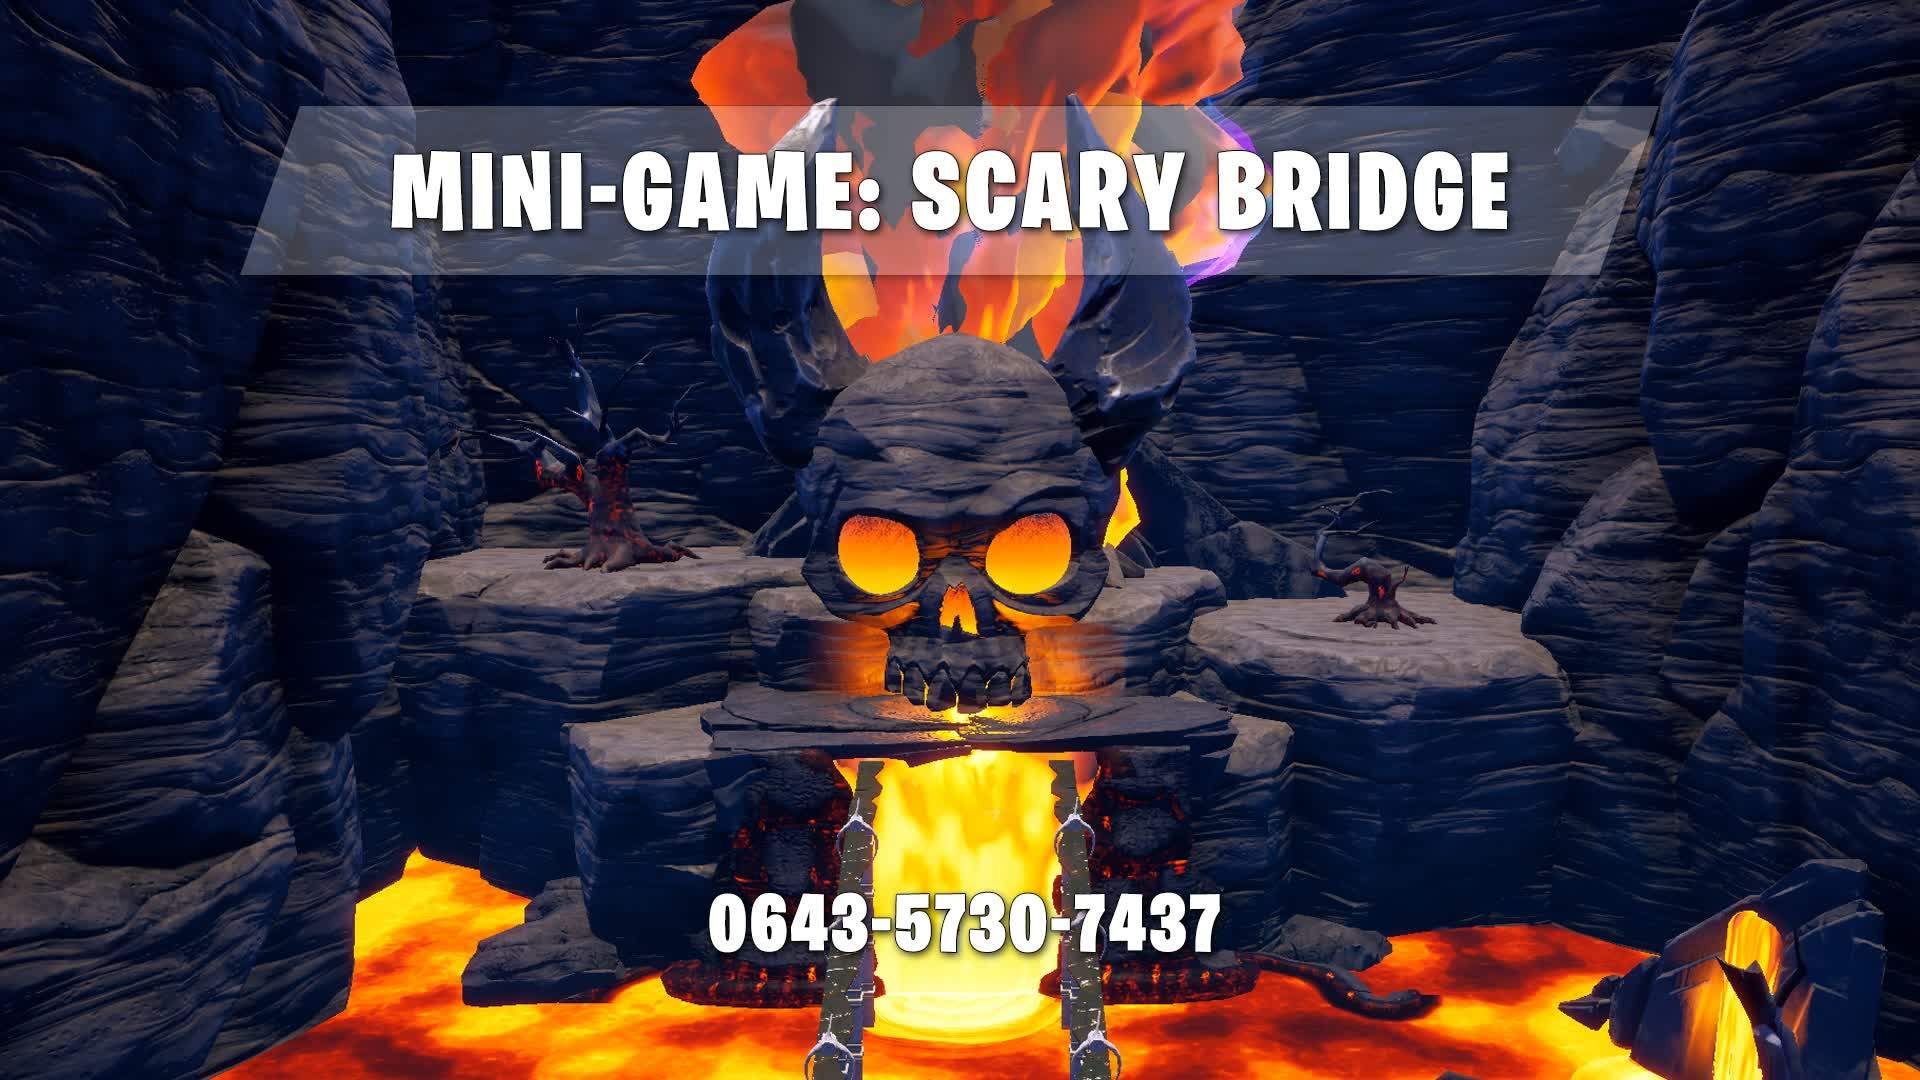 MINI-GAME: SCARY BRIDGE